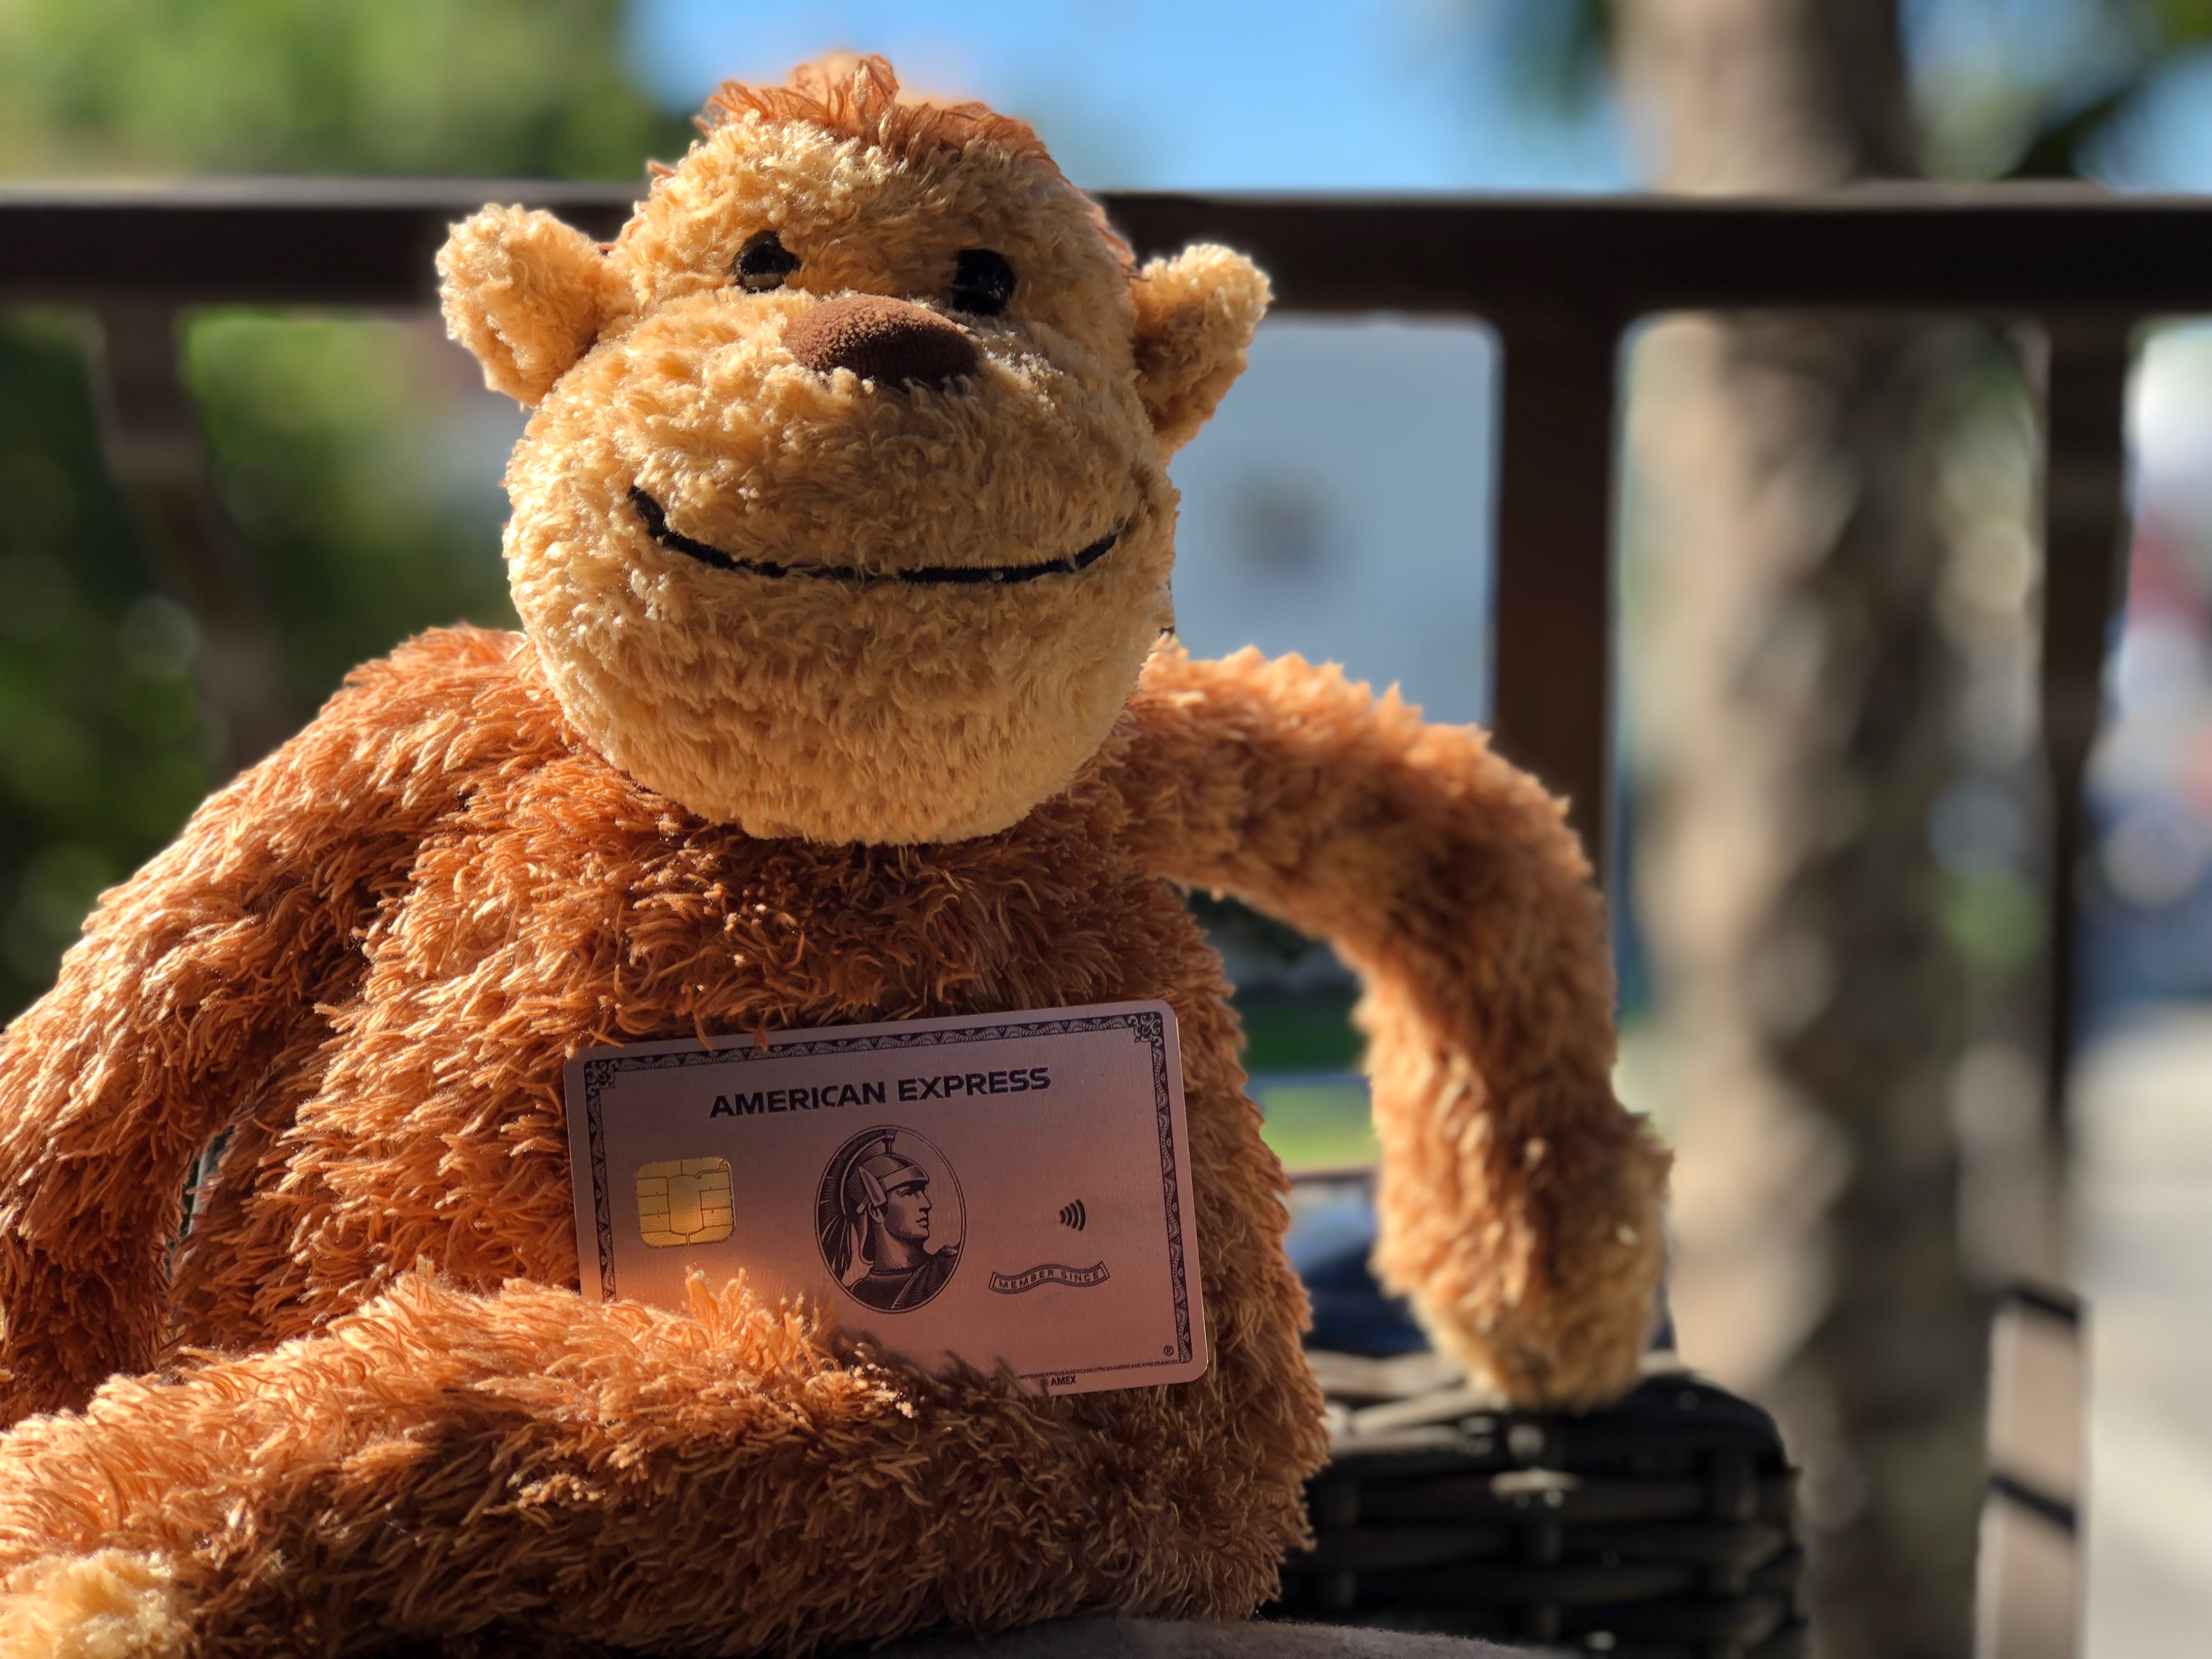 a stuffed animal with a card